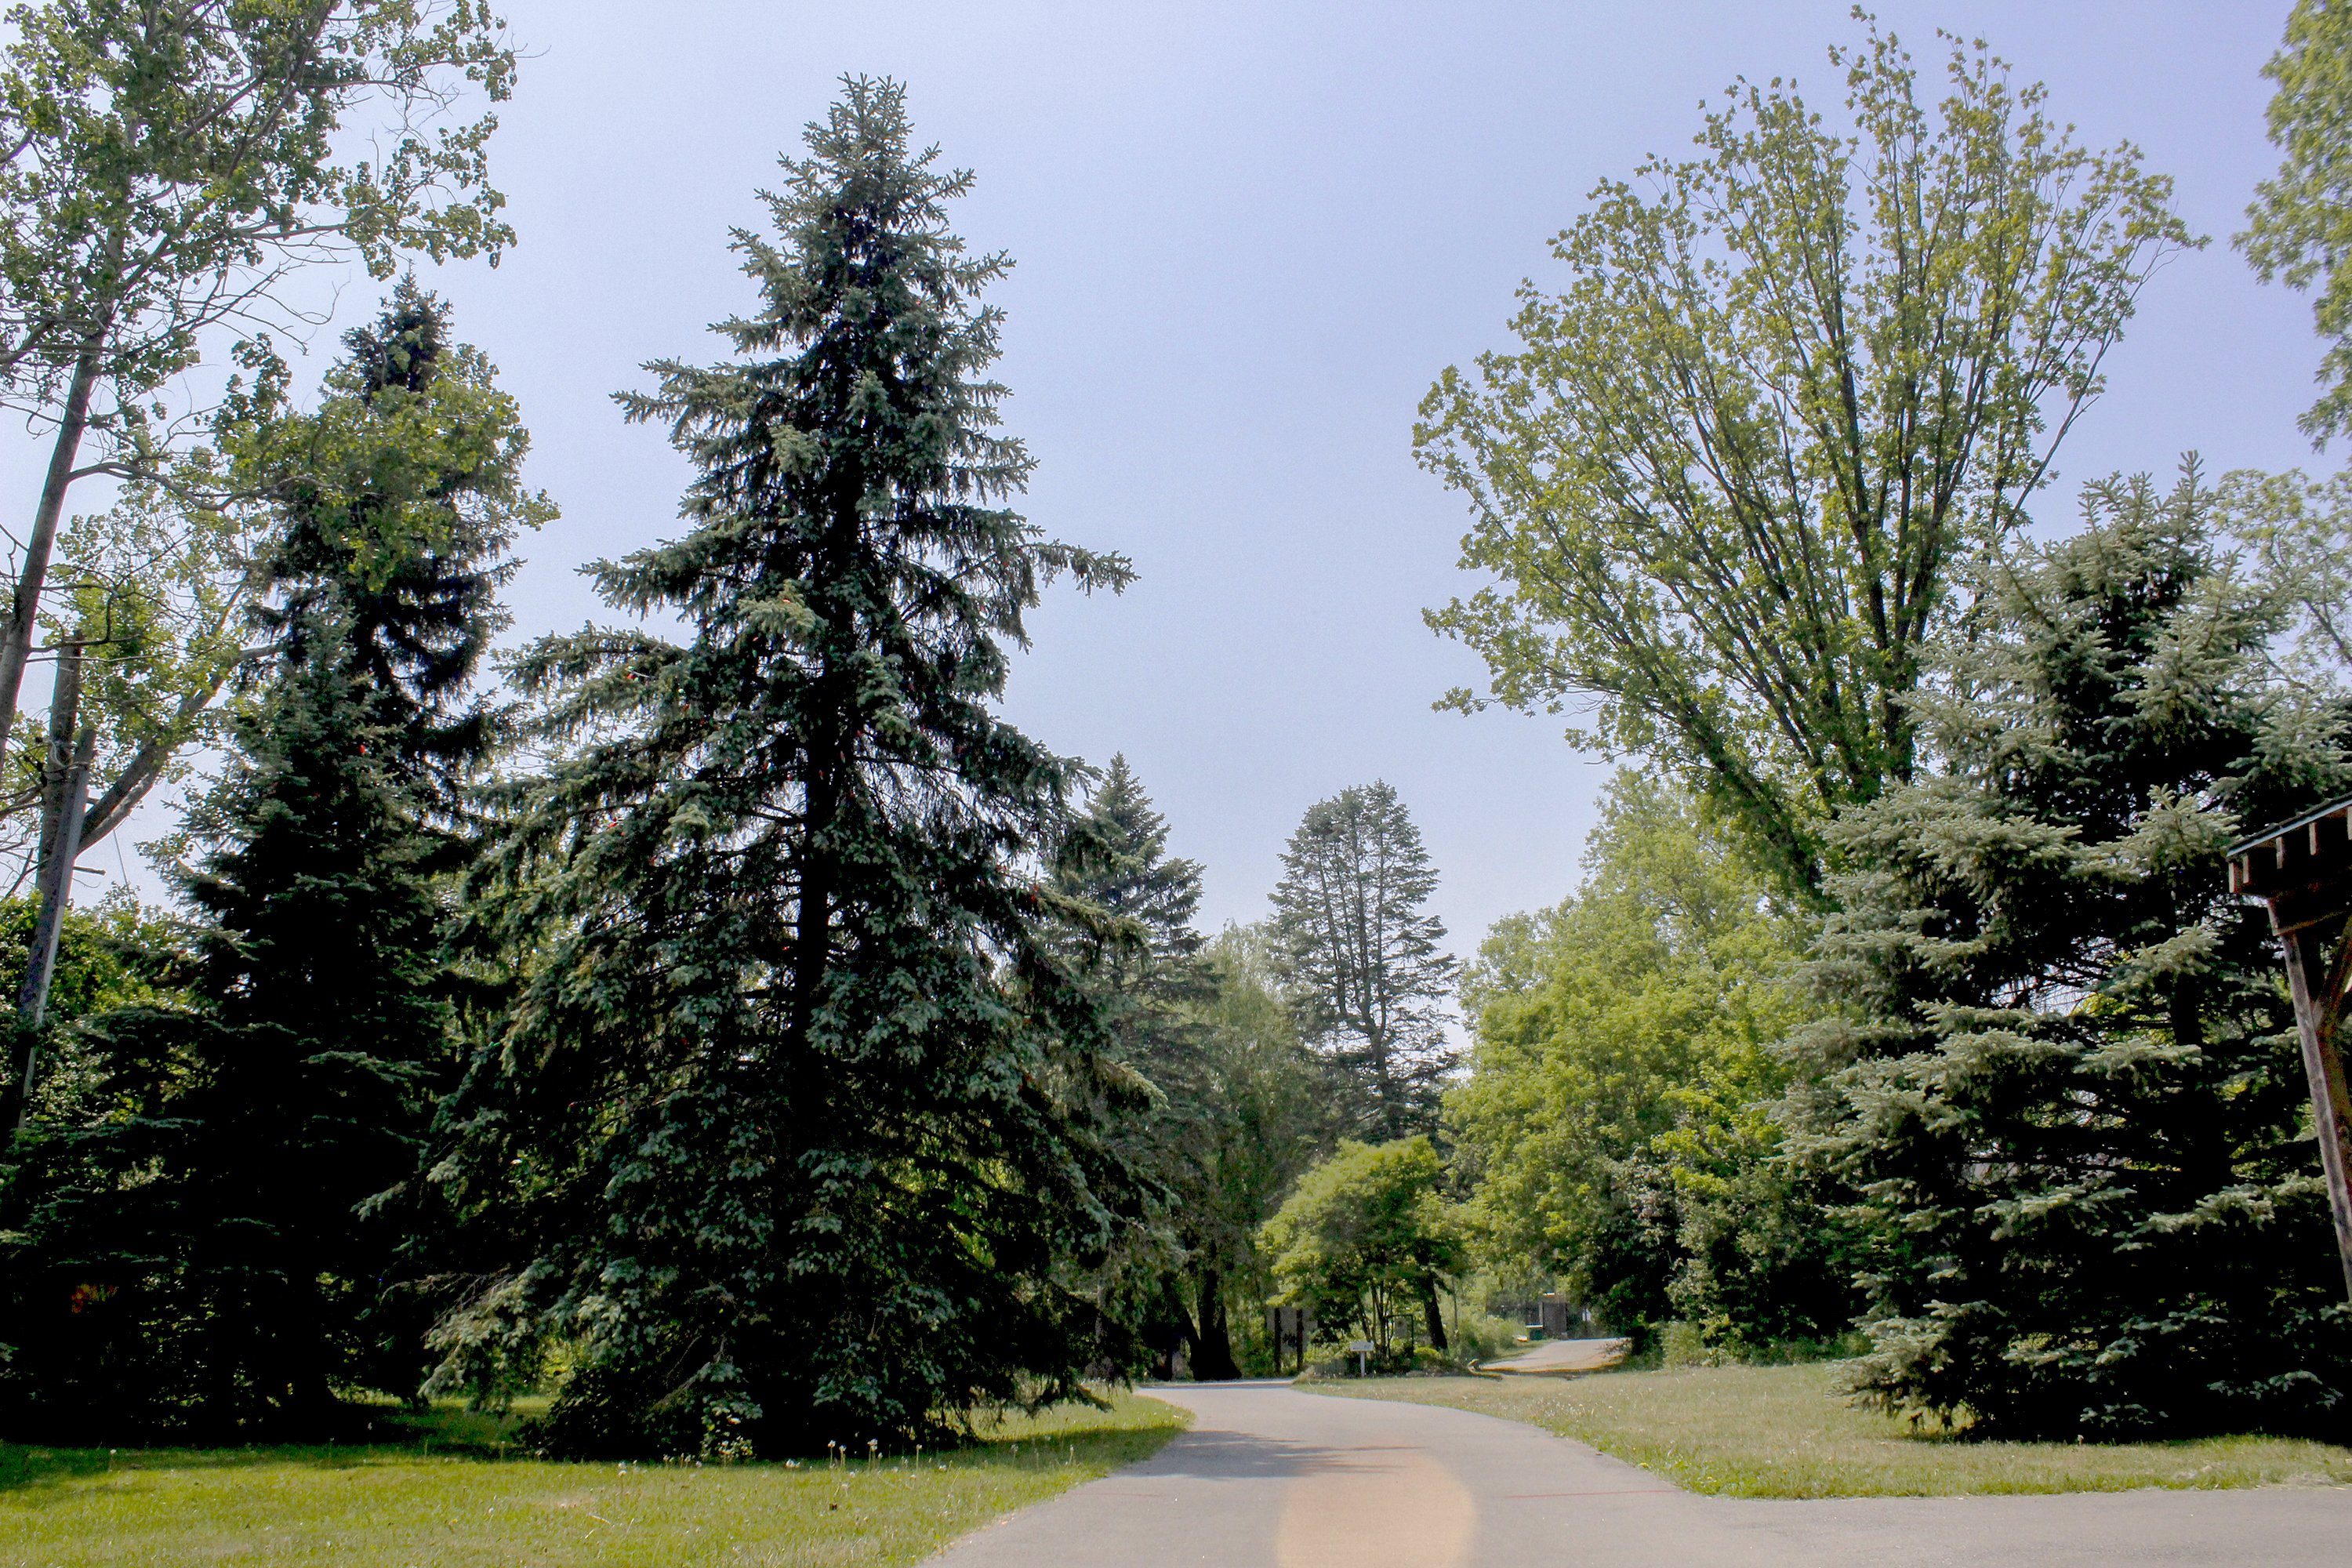 A tree canopy over a park path